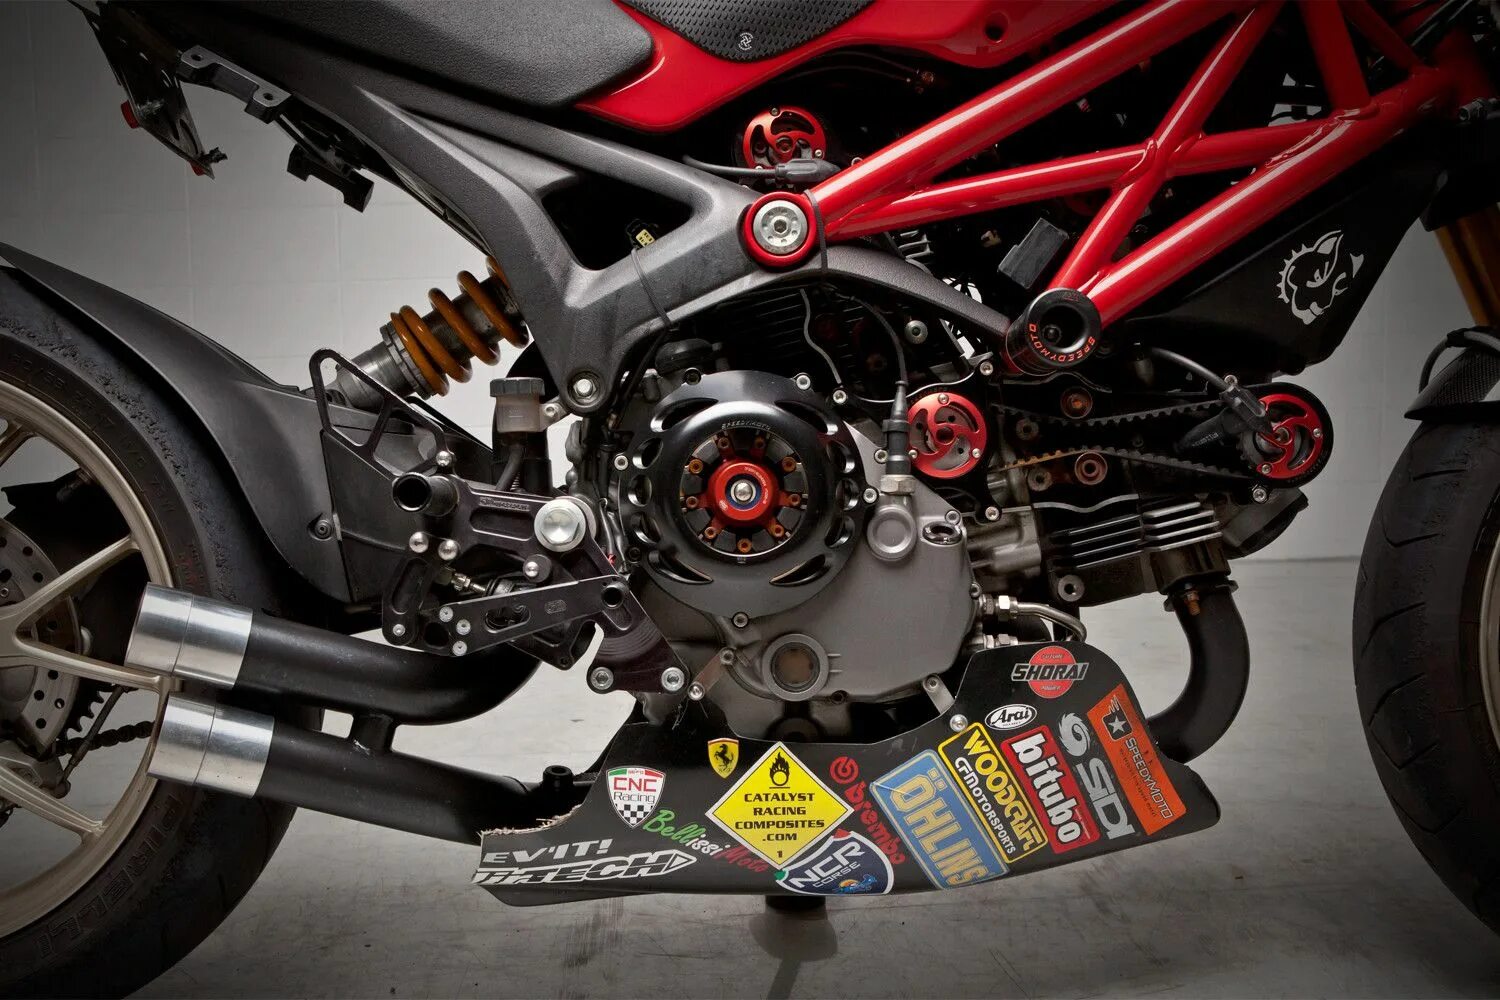 Ducati Monster 1200 engine. Двигатели Ducati Monster. Ducati Monster 1200 Custom. Ducati Monster 796 Exhaust. R details